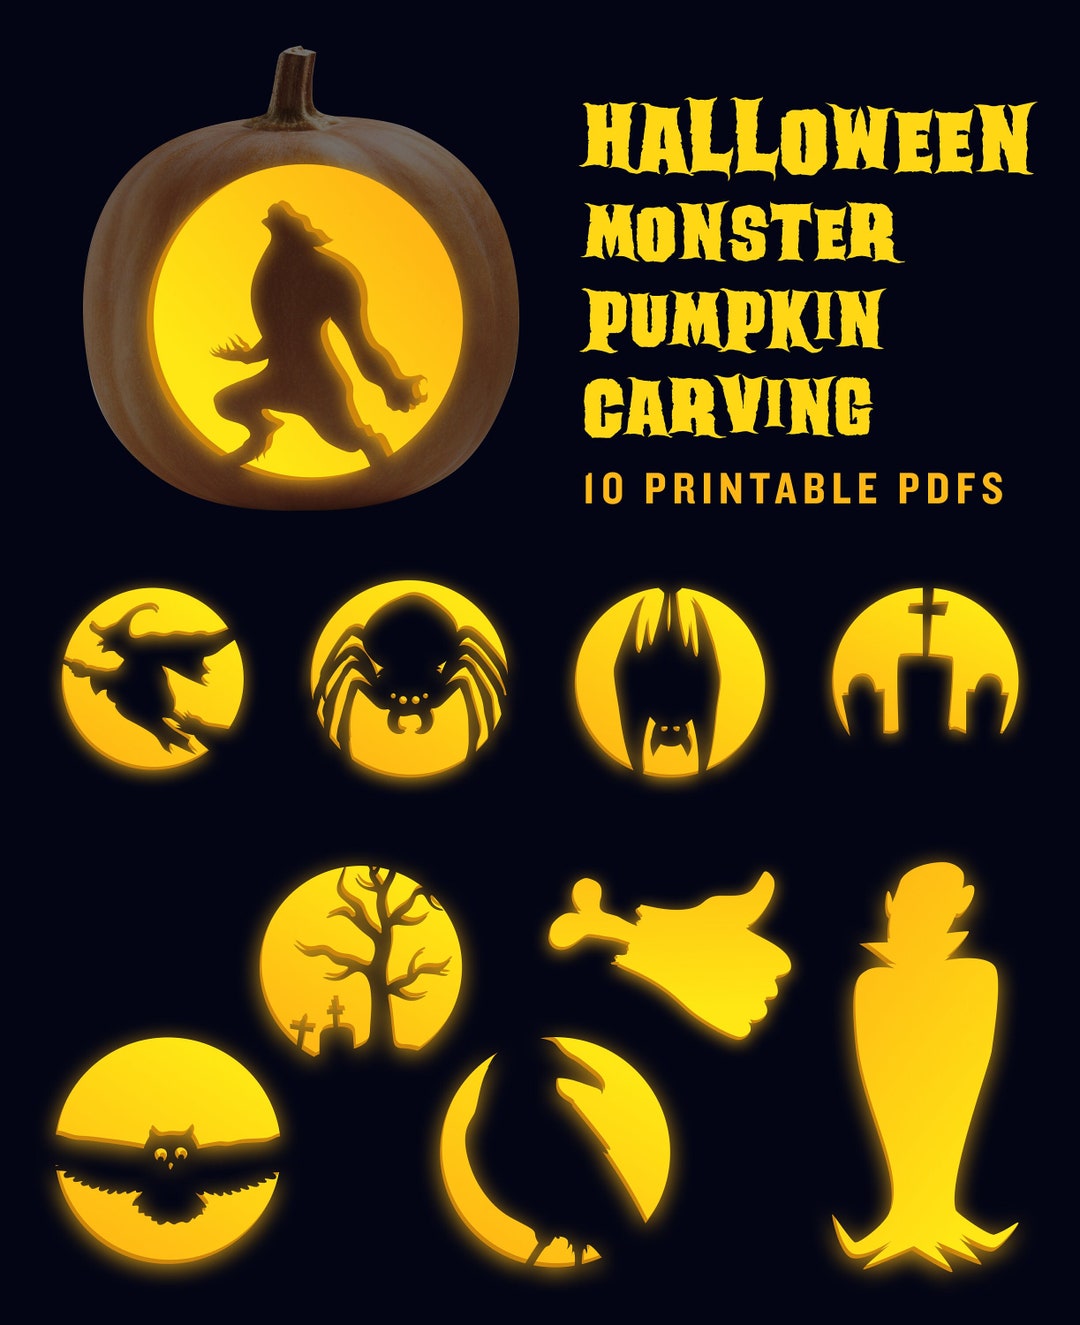 Printable Halloween Pumpkin Carving Stencils  Featuring a